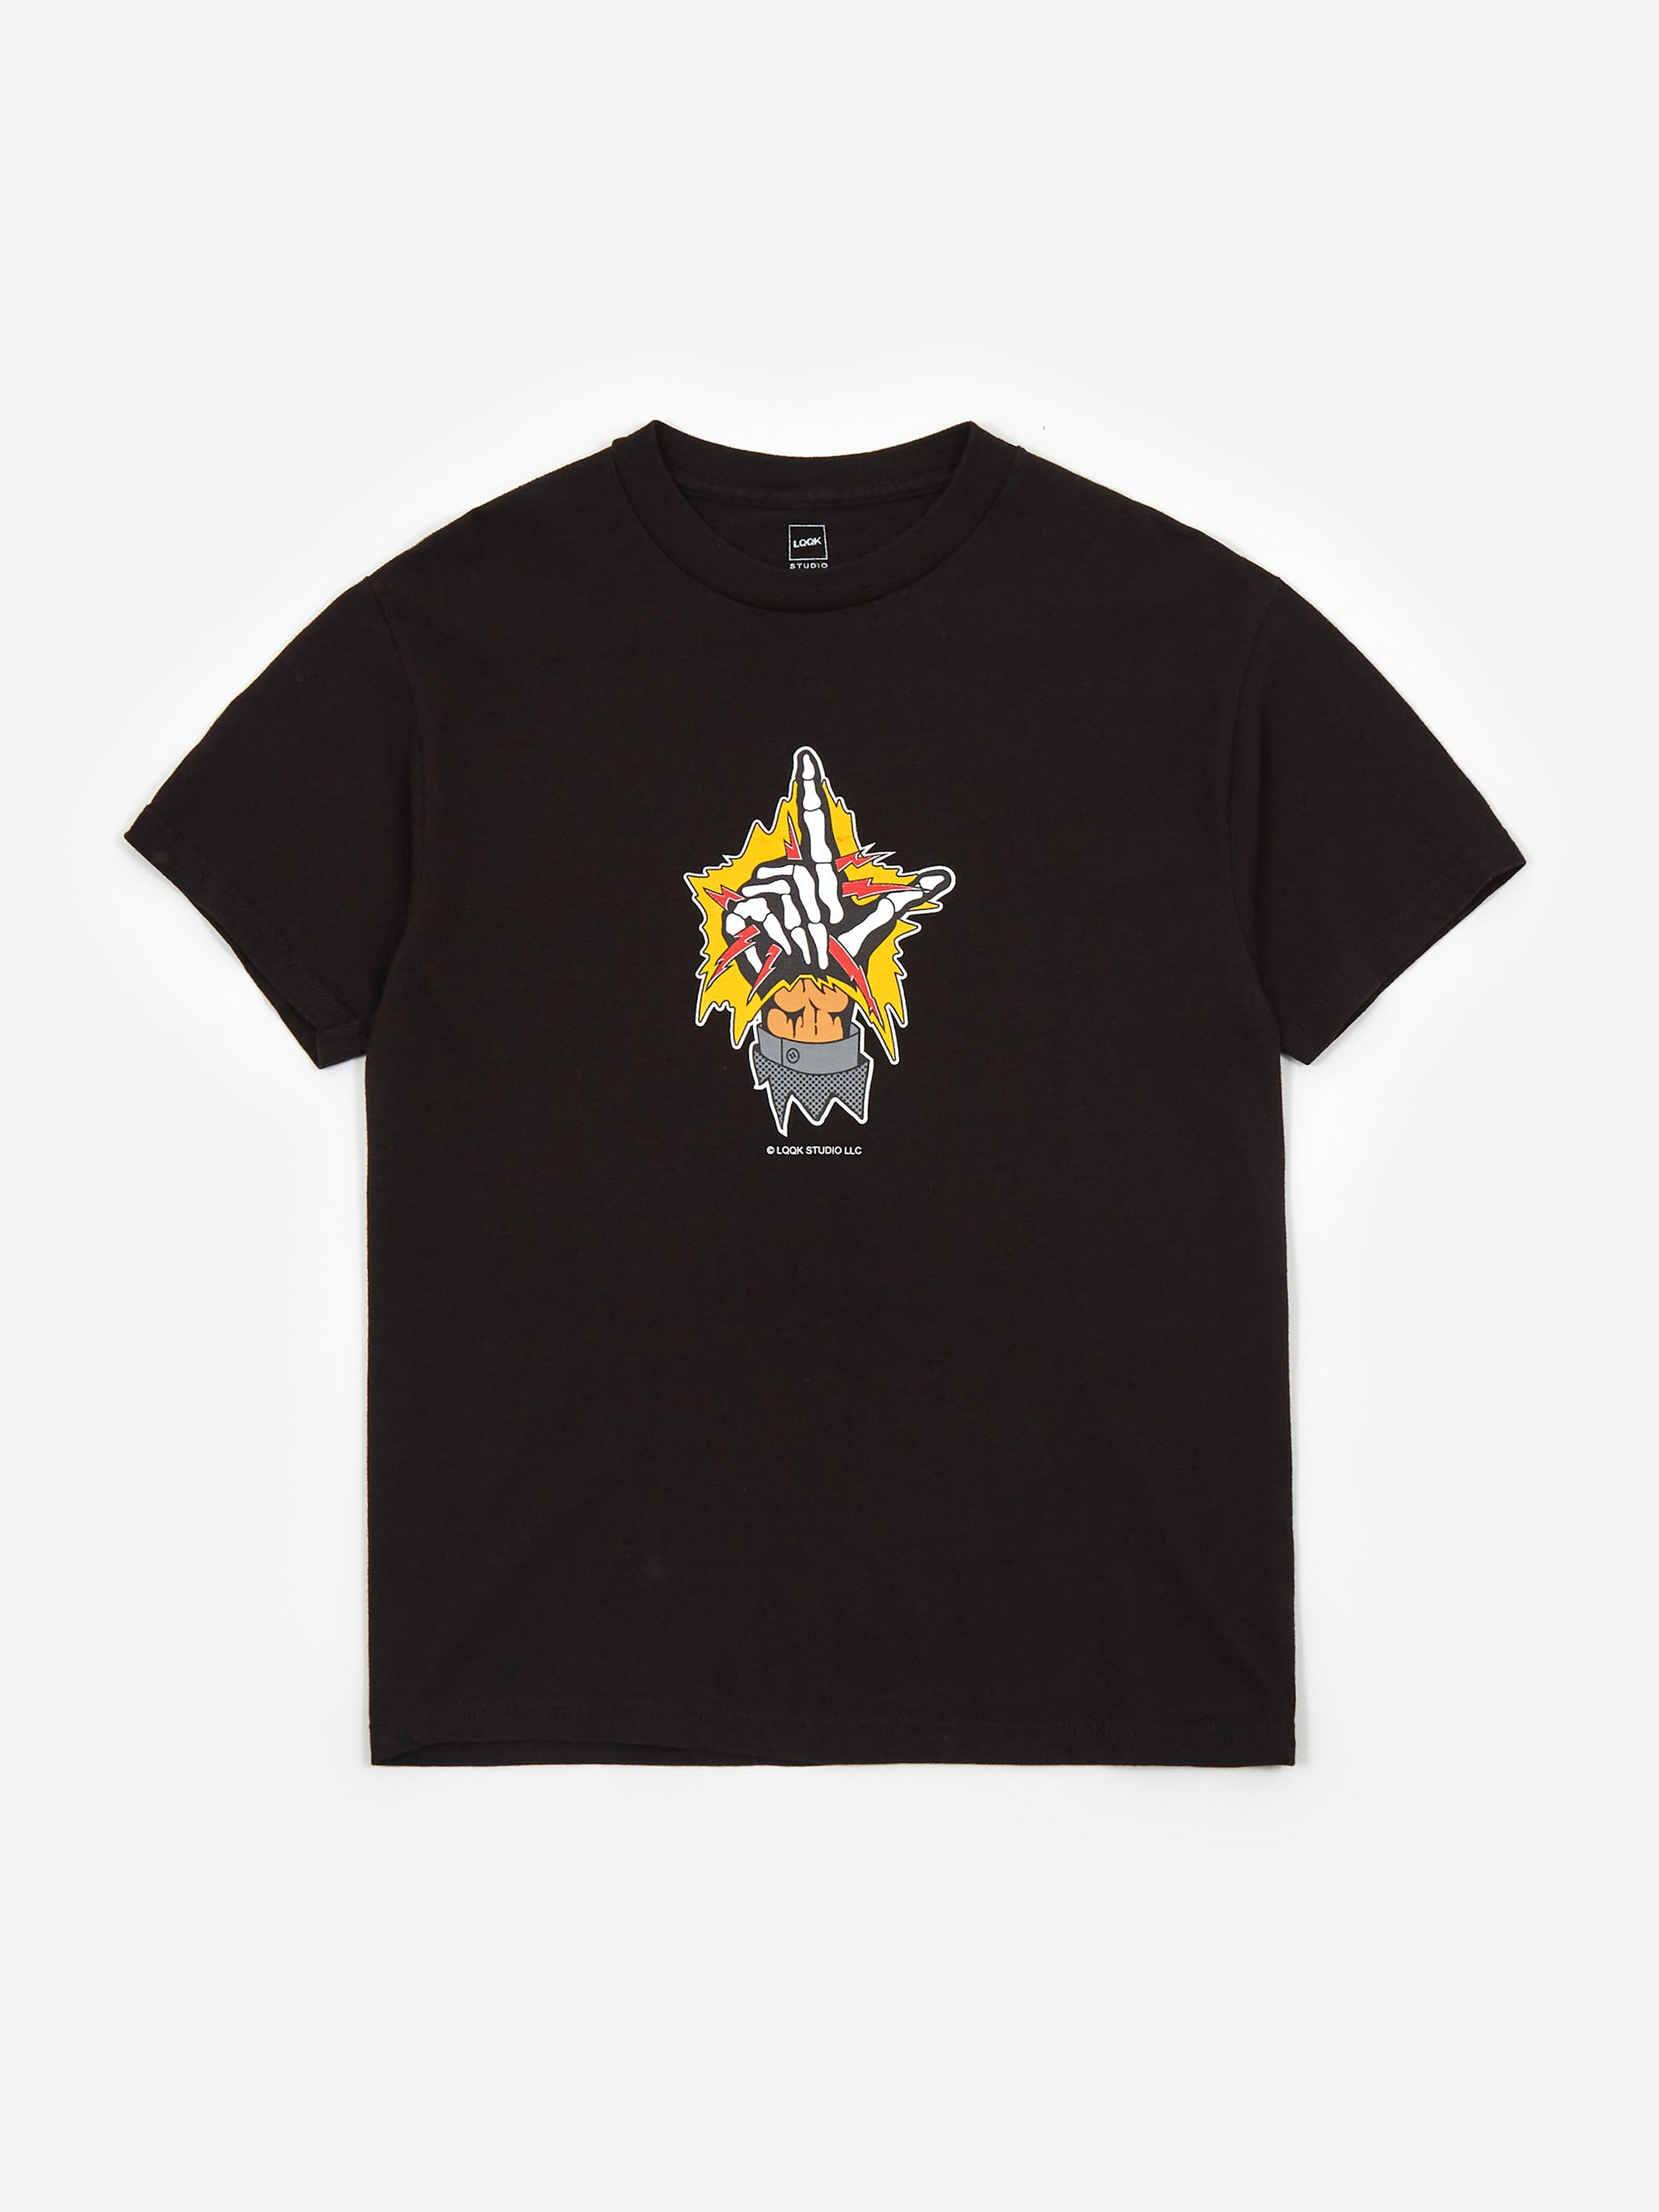 LQQK STUDIO / STACKED LOGO S/S TEE - Tシャツ/カットソー(半袖/袖なし)